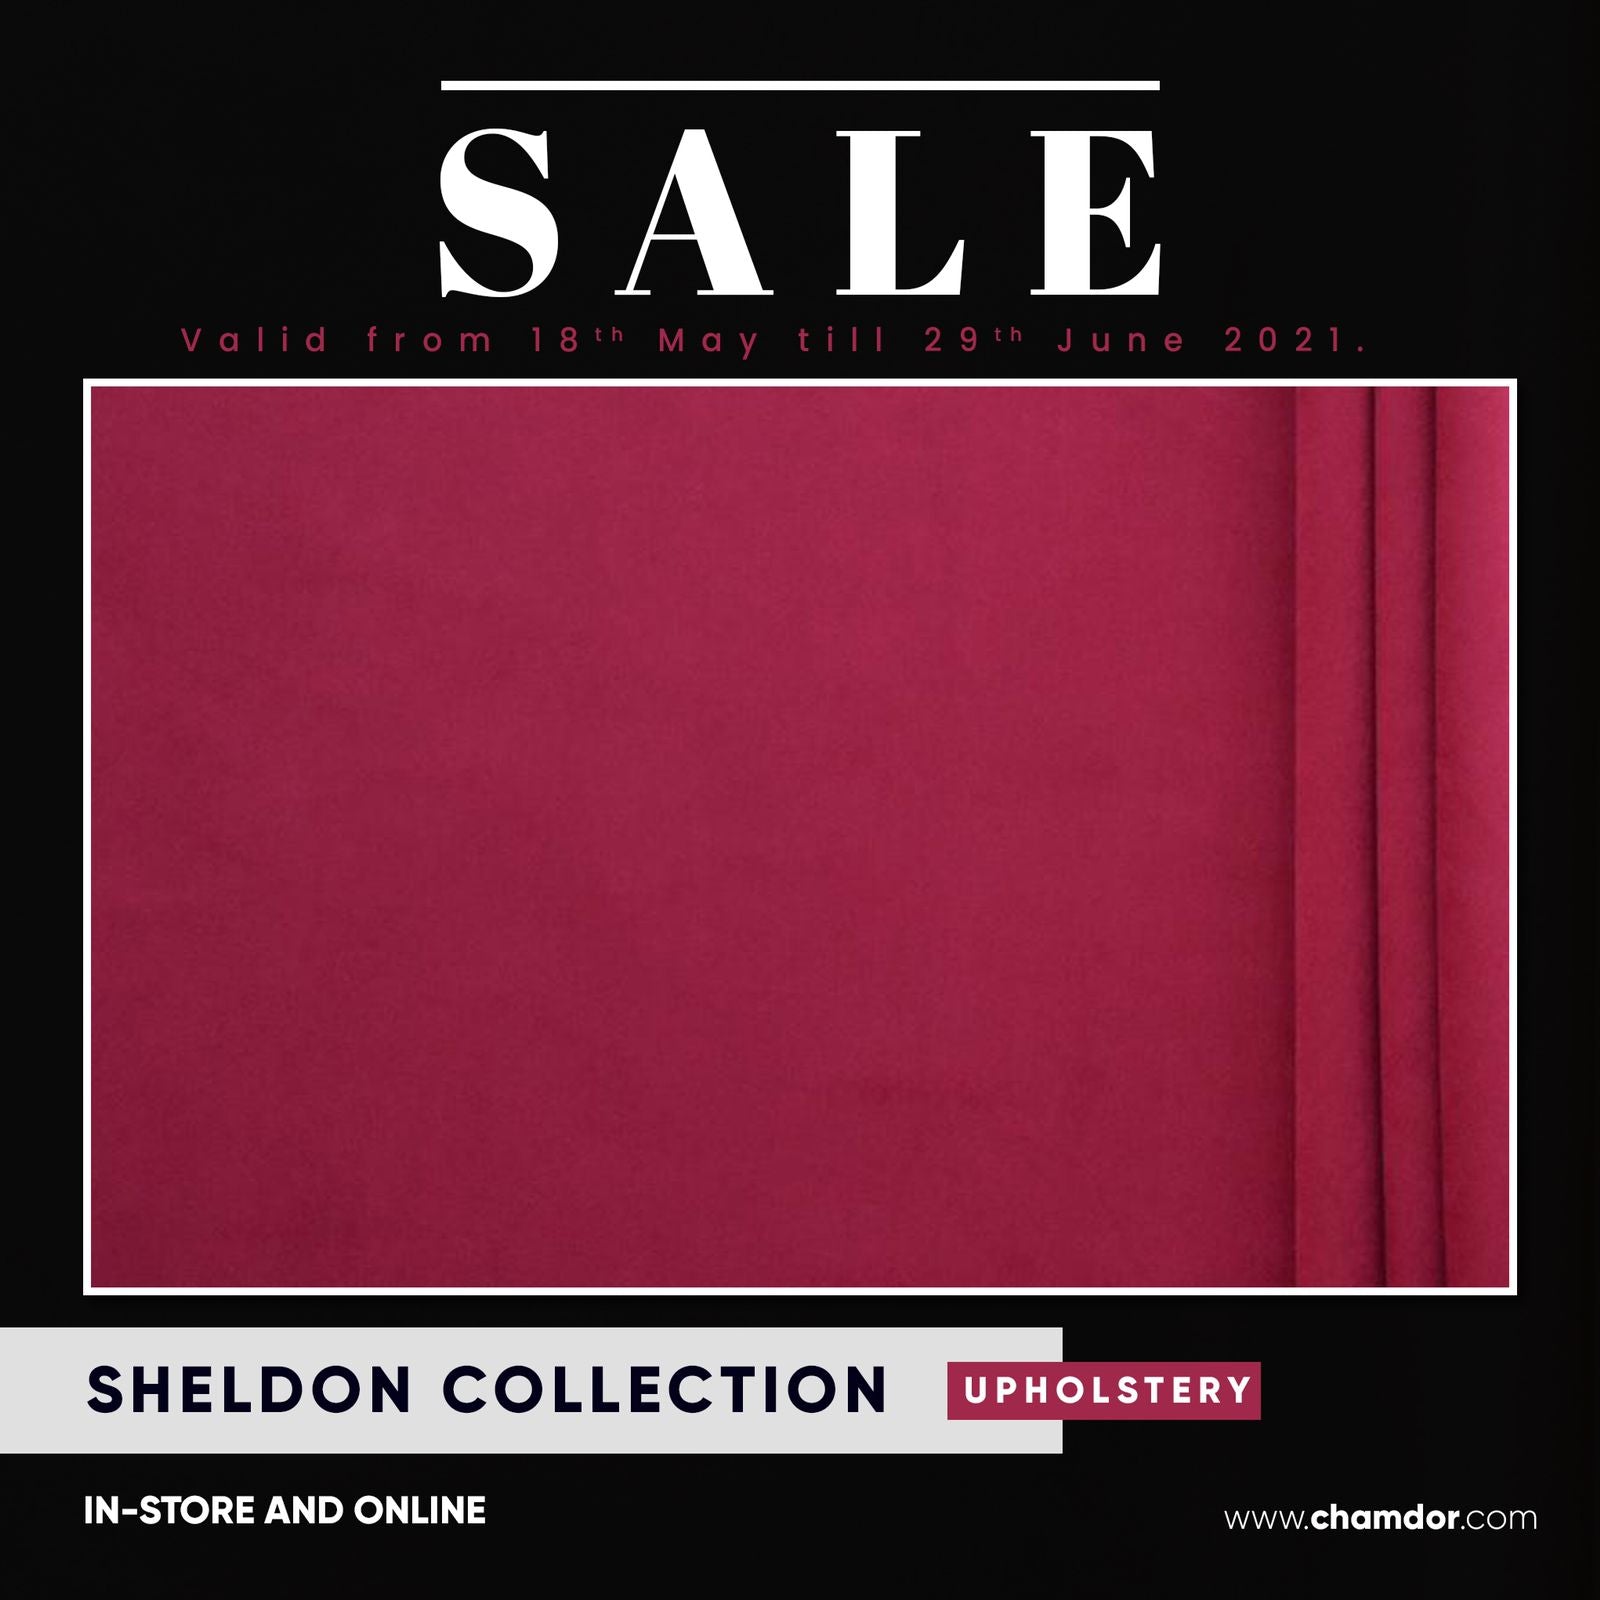 Sheldon Collection - SALE